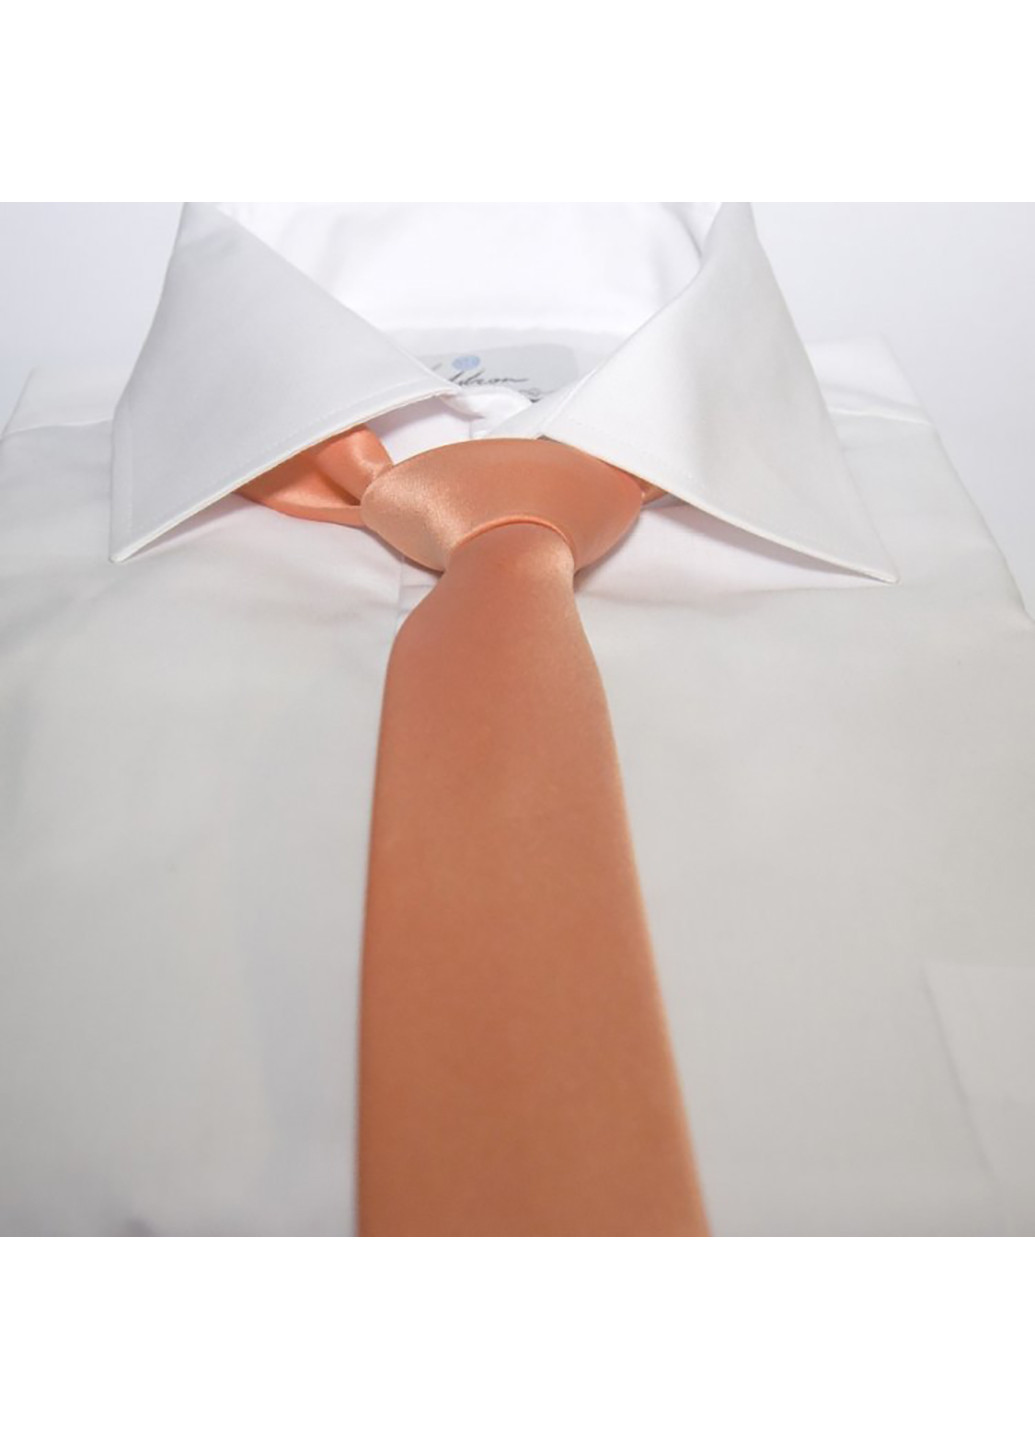 Мужской галстук 5 см Handmade (252133510)